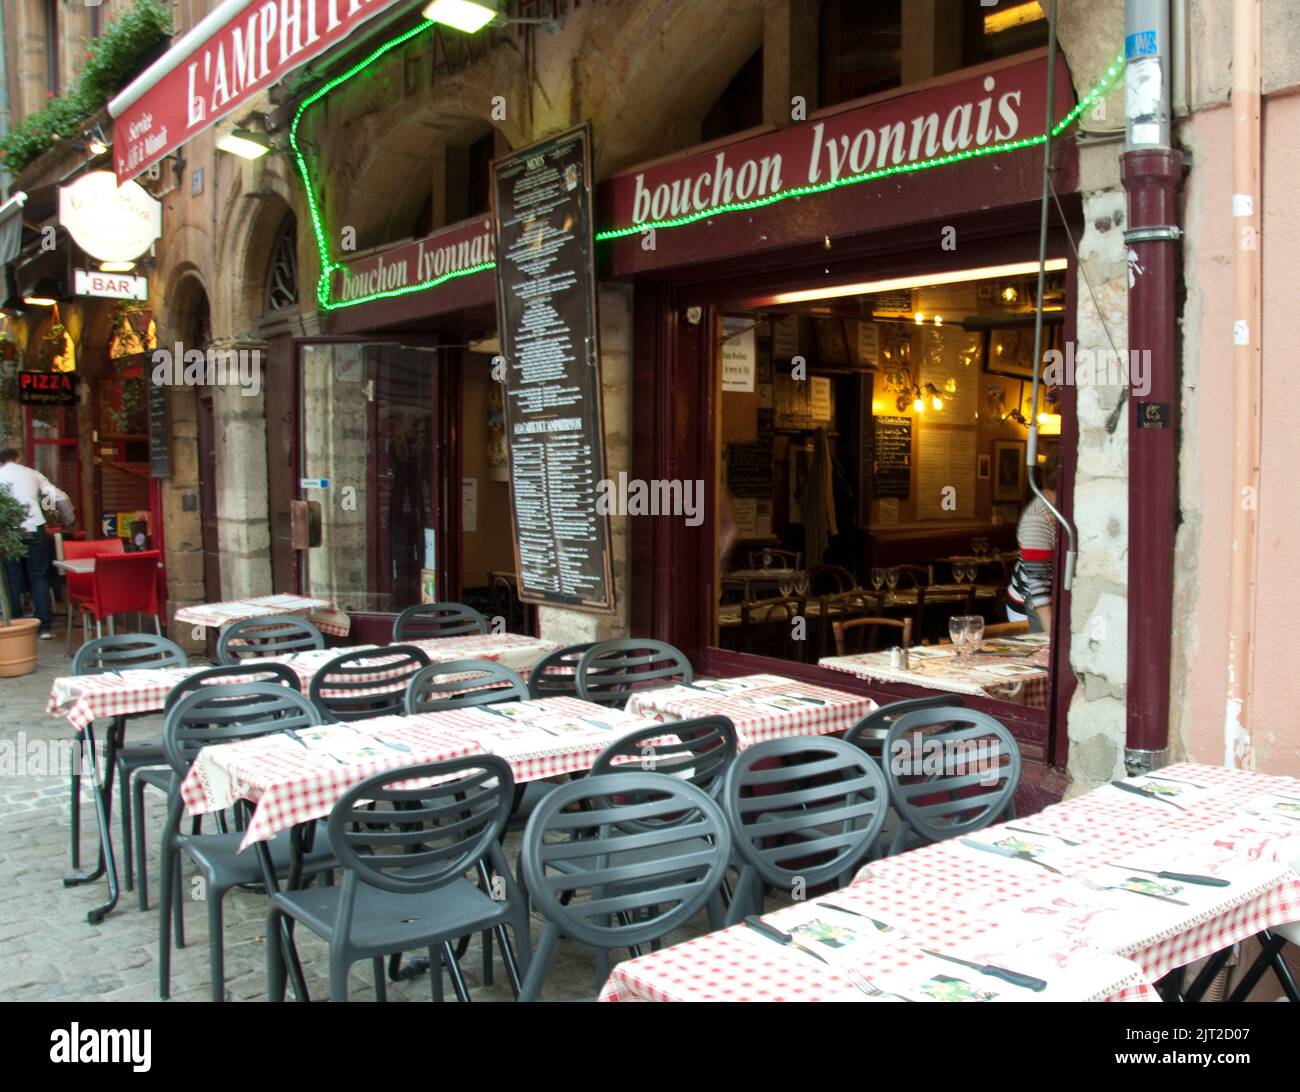 Bouchon Lyonnais, Restaurant, Lyon, Rhone, Rhone-Alpes, France.  Lyon is considered the gastronomic capital of France. Stock Photo